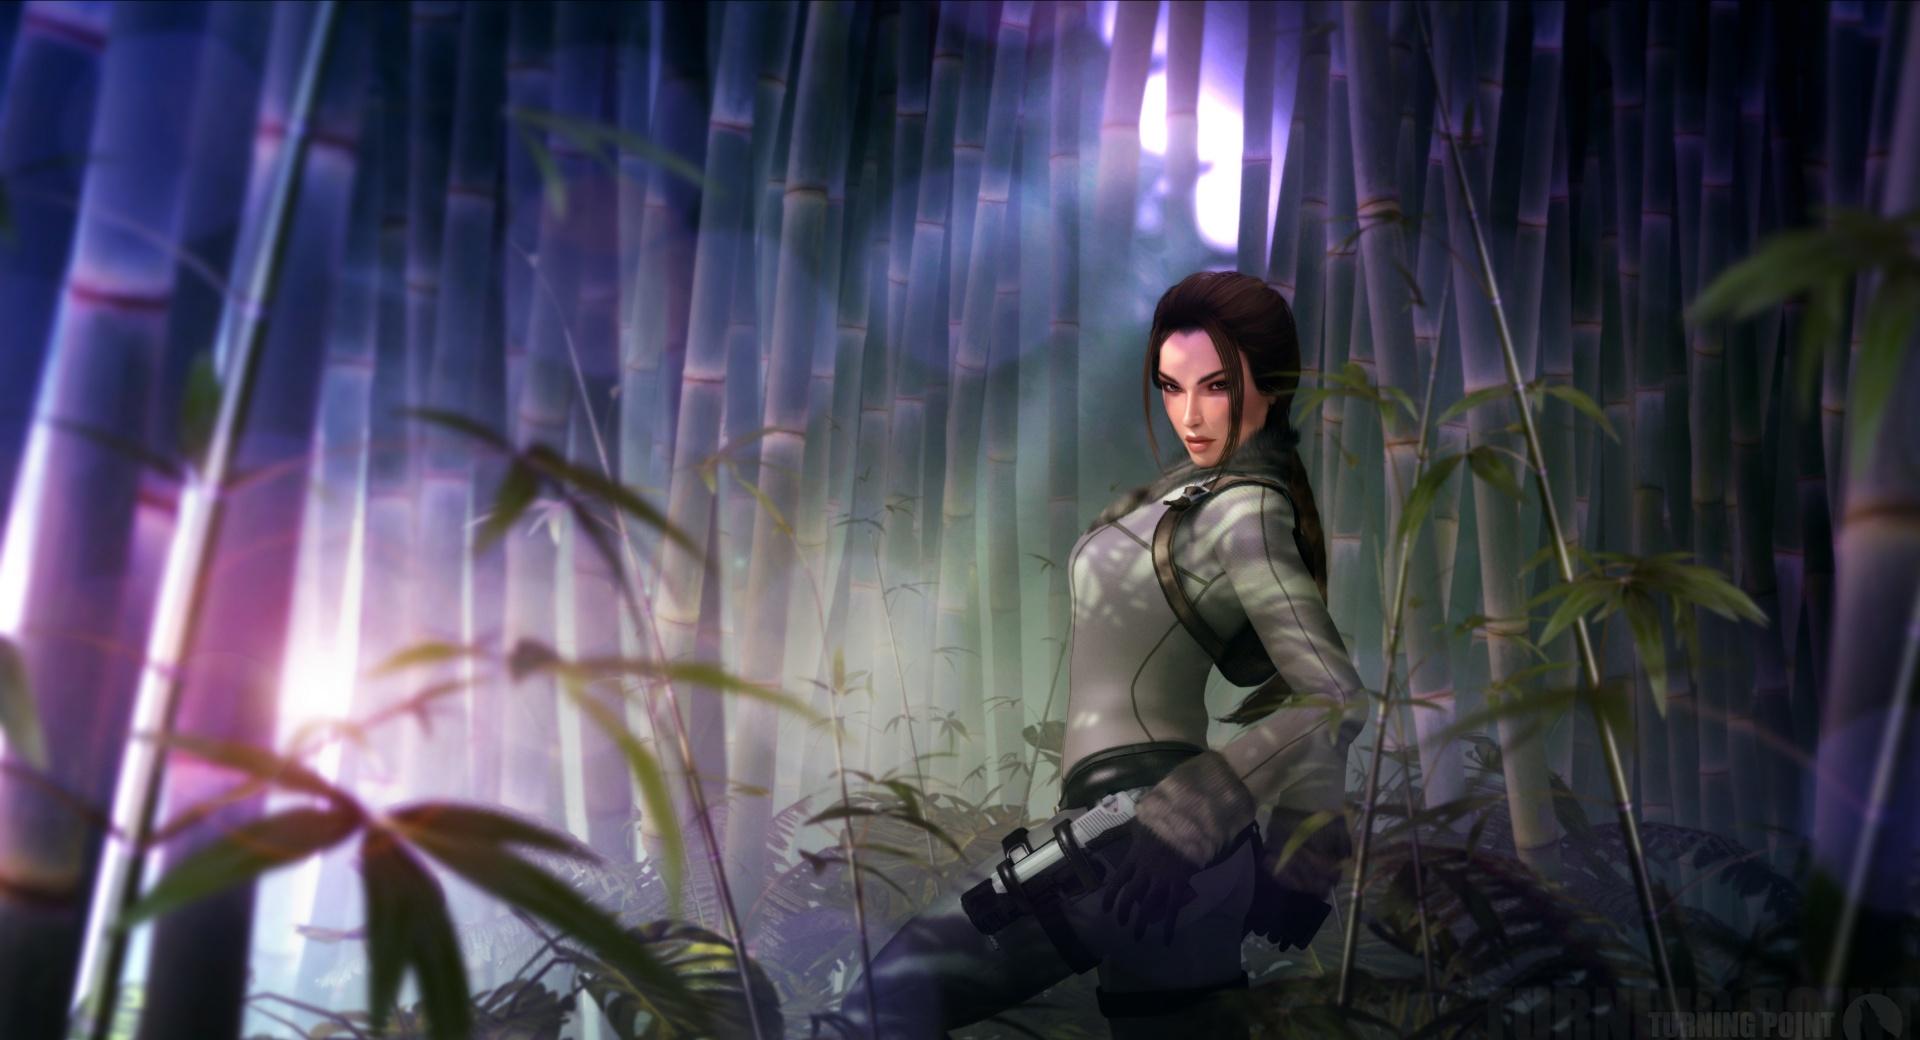 Lara Croft FanArt wallpapers HD quality